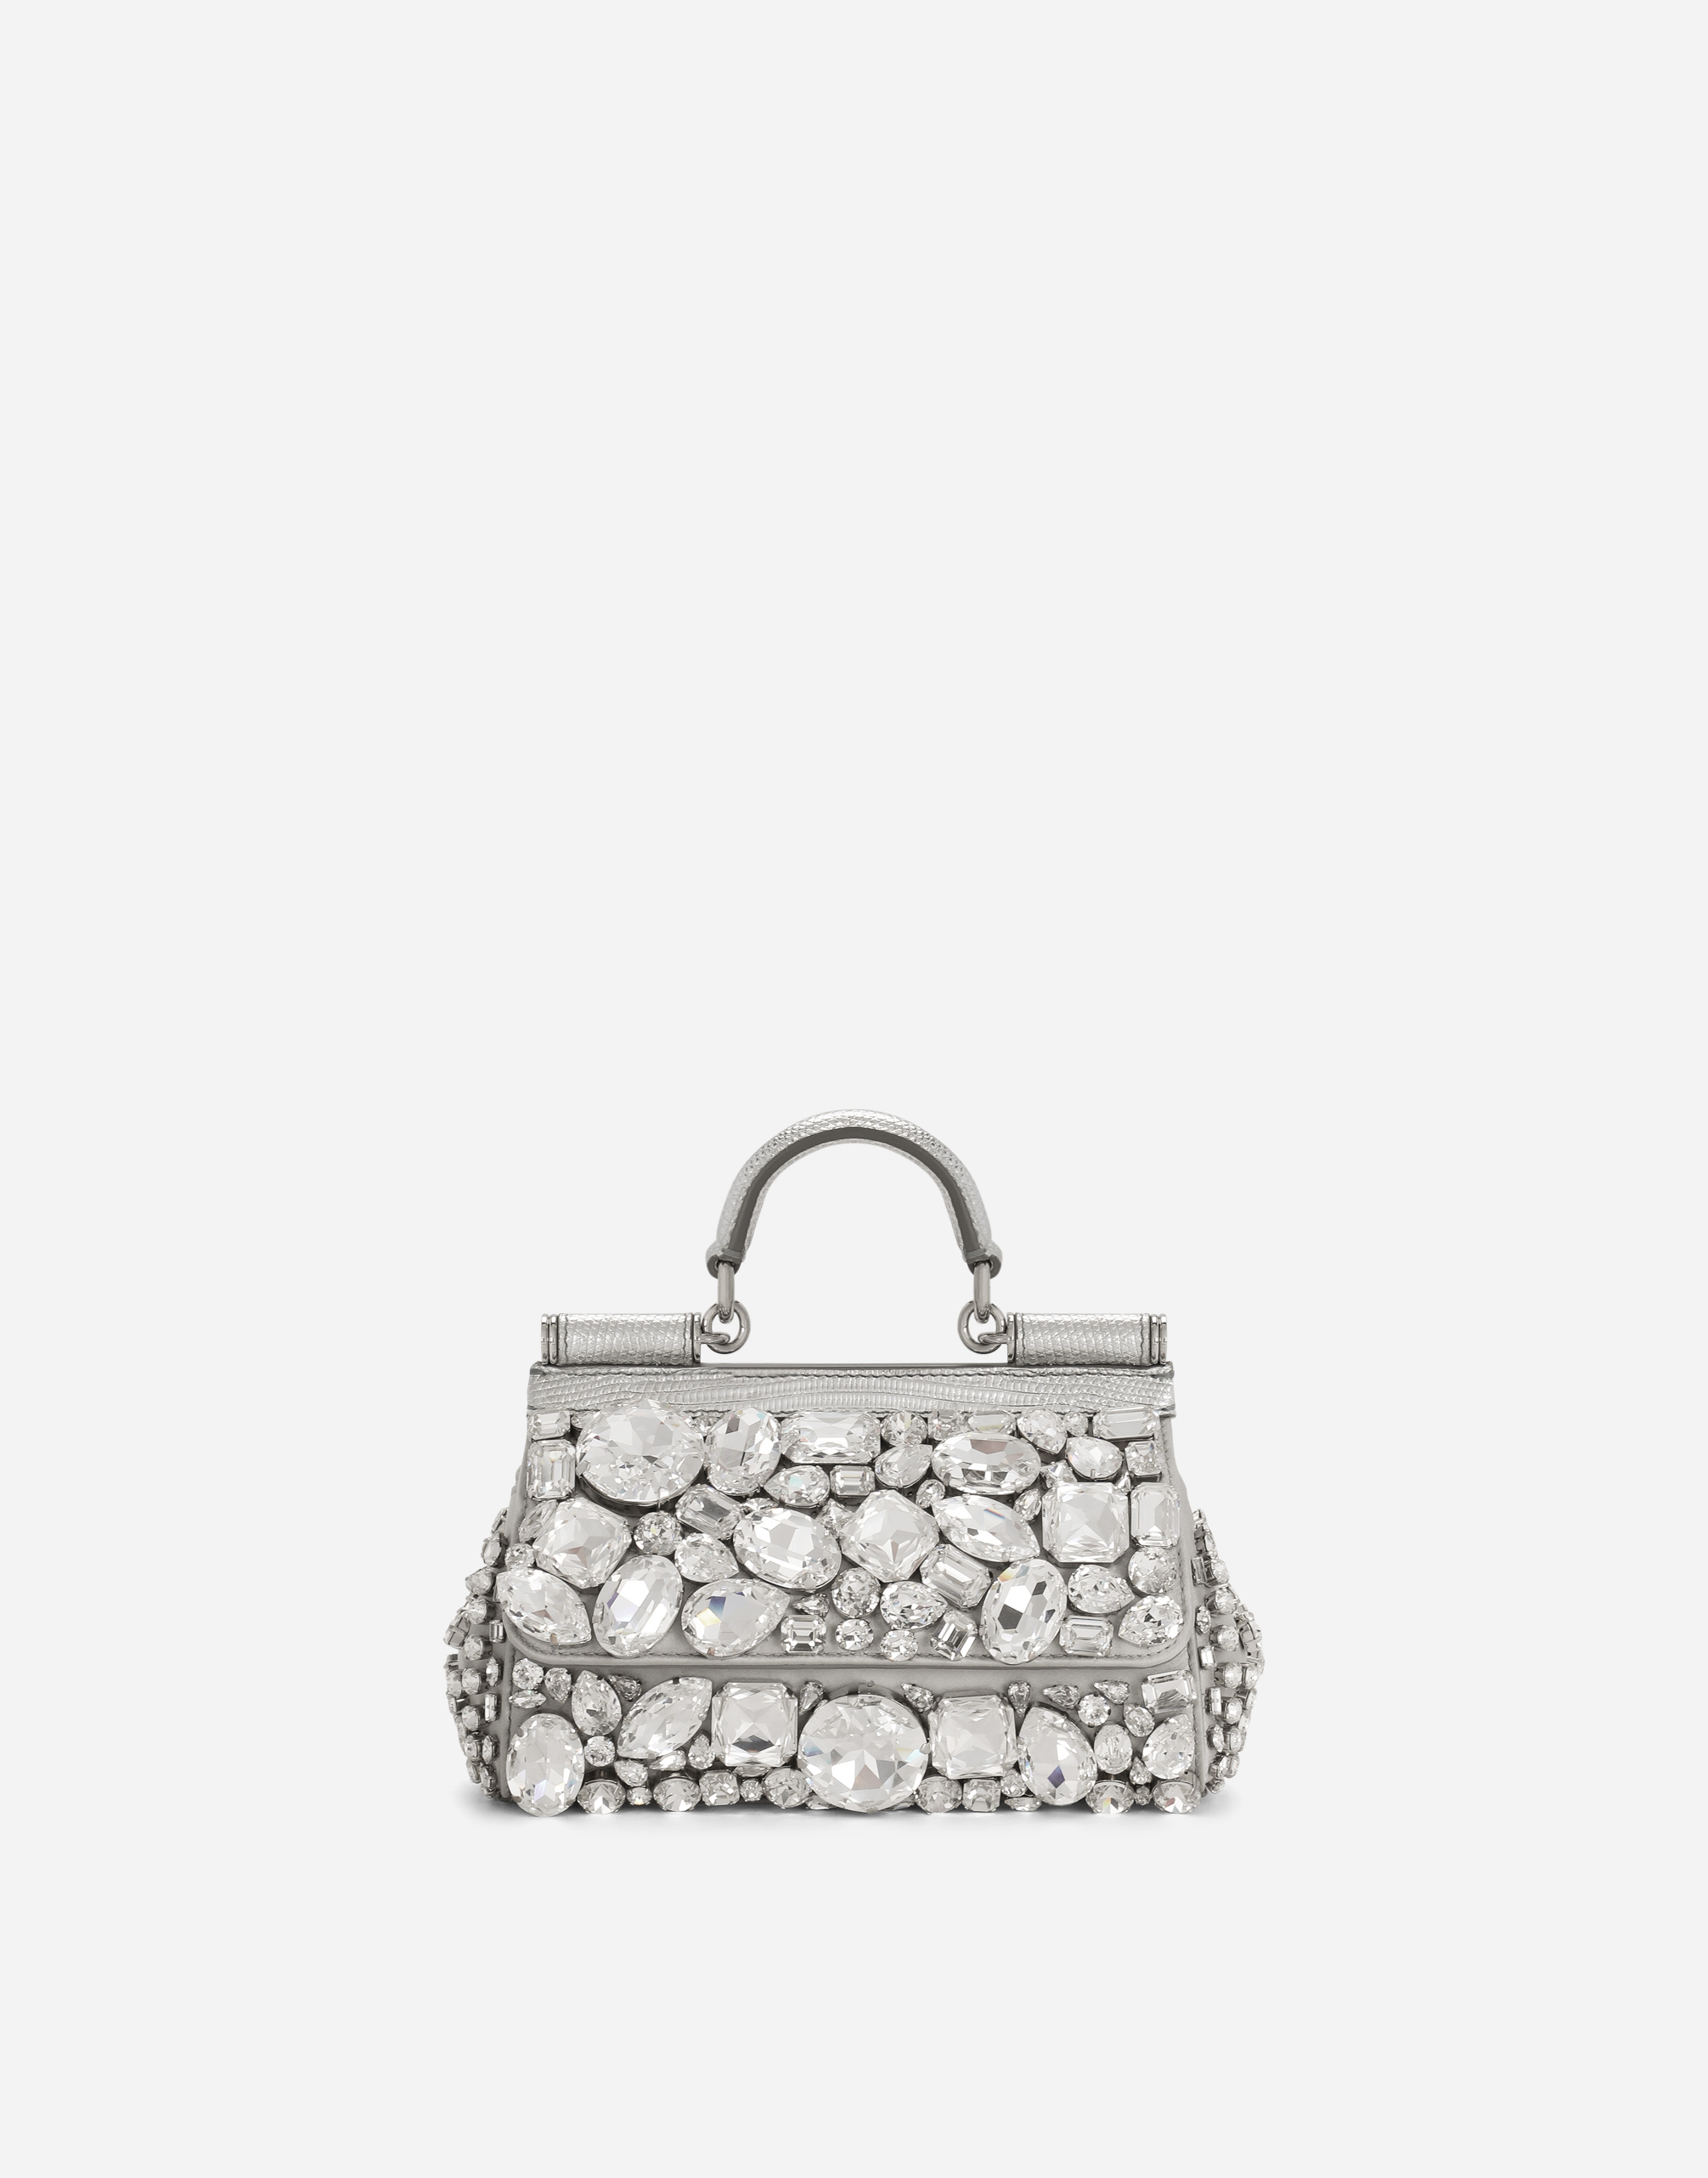 KIM DOLCE&GABBANA Small Sicily handbag in Silver